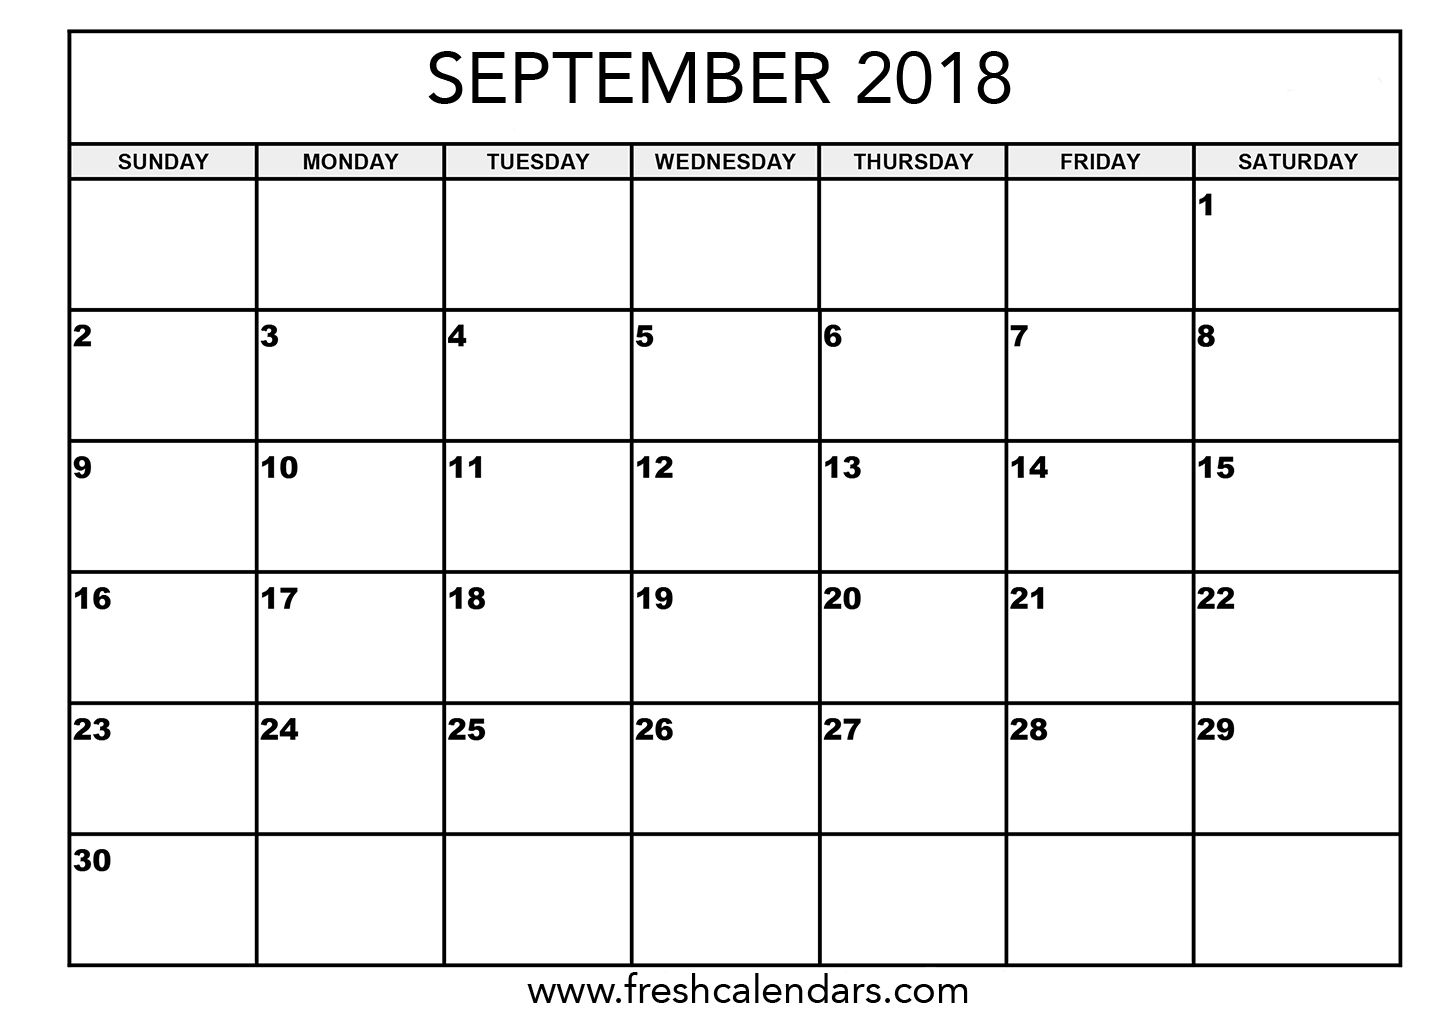 September 2018 Calendar Printable - Fresh Calendars throughout Calendar Of The Month Of September